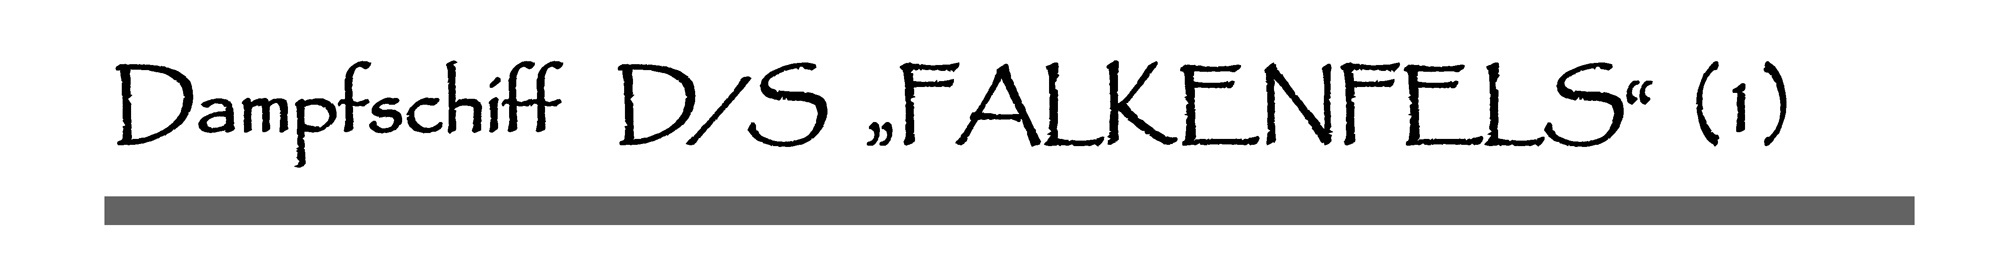 Falk02 Dampfschiff txt